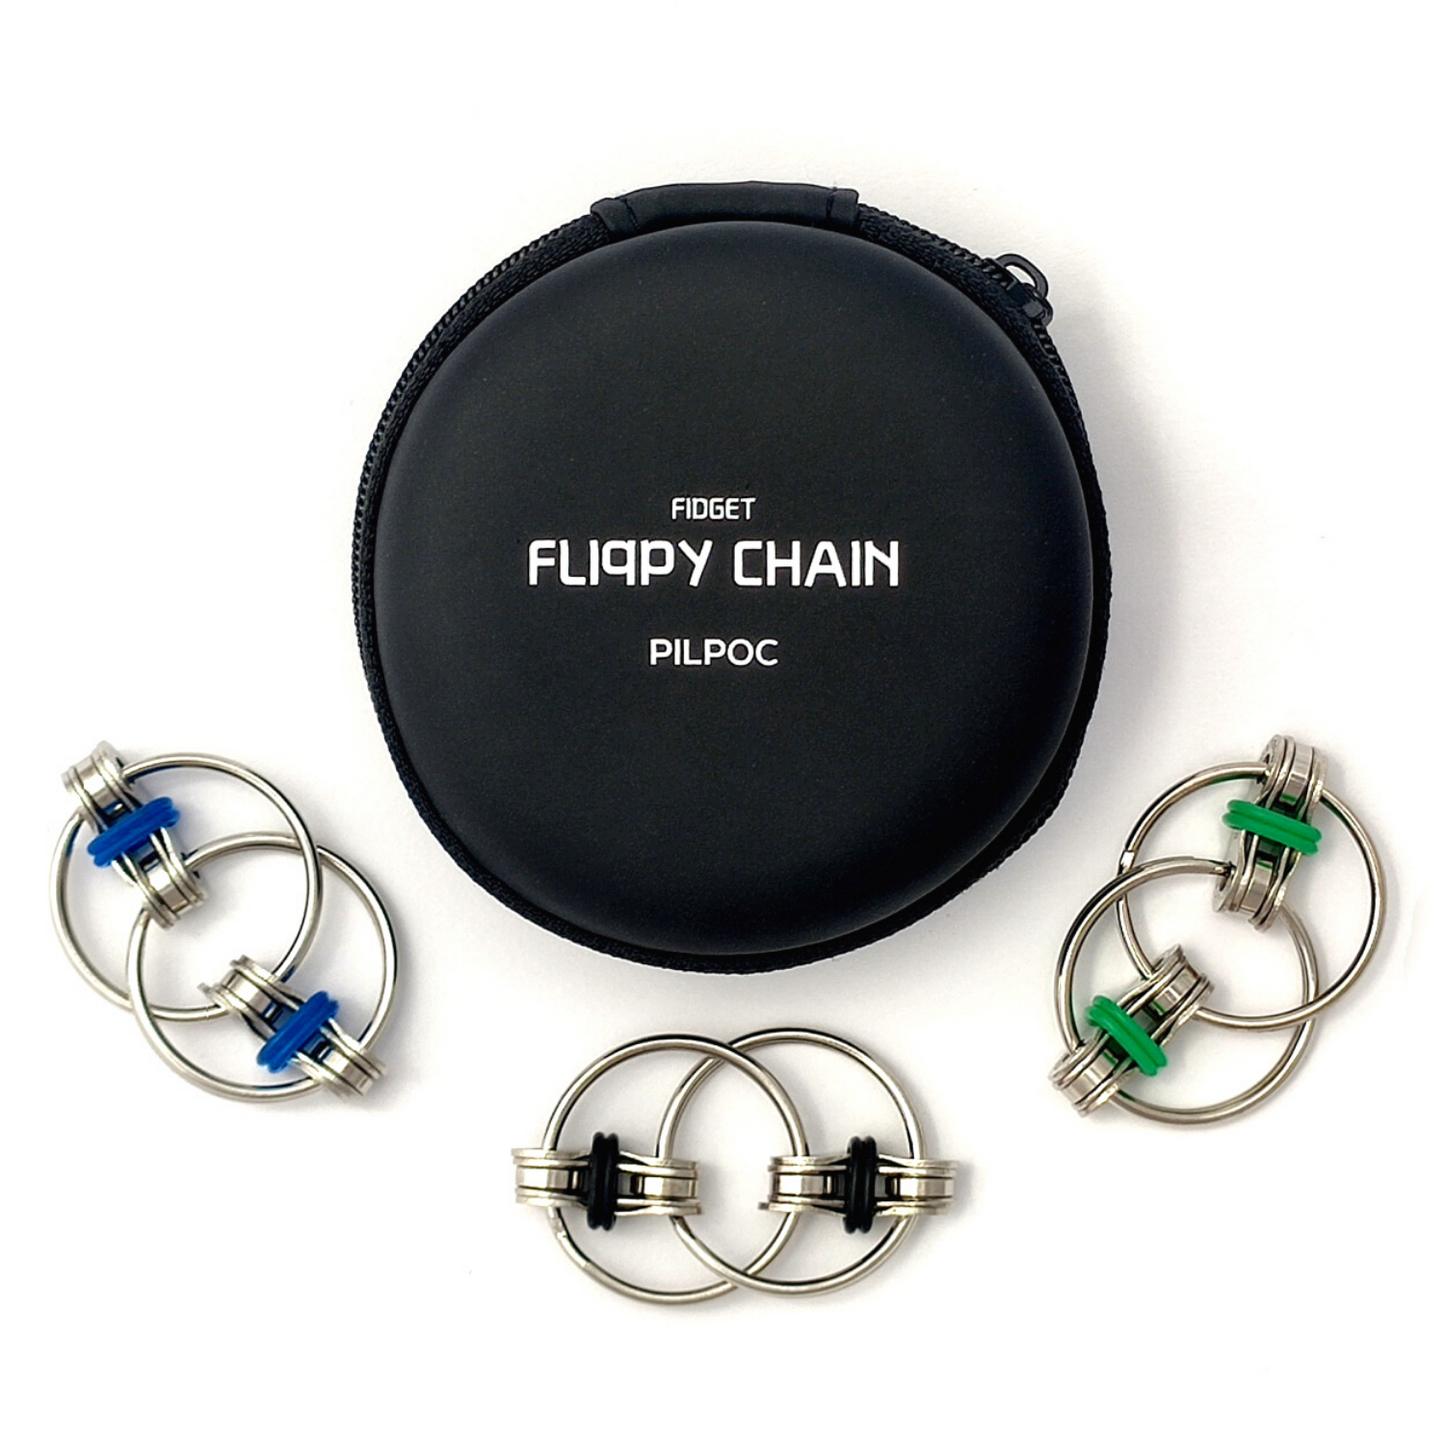 Fidget flippy chain